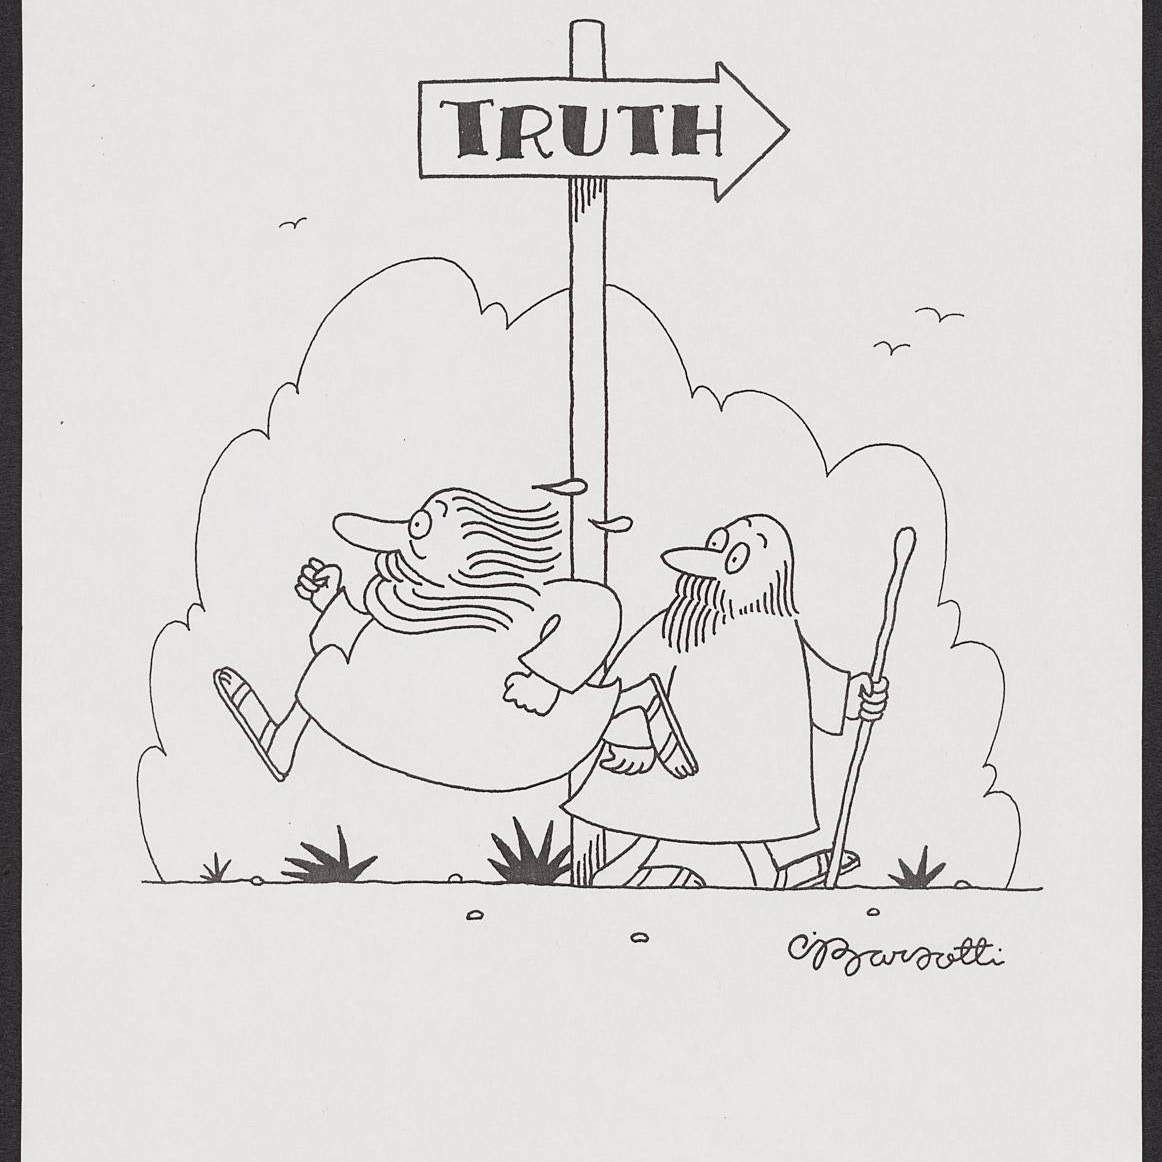 Cartoon called "Truth" by Chrles Barsotti